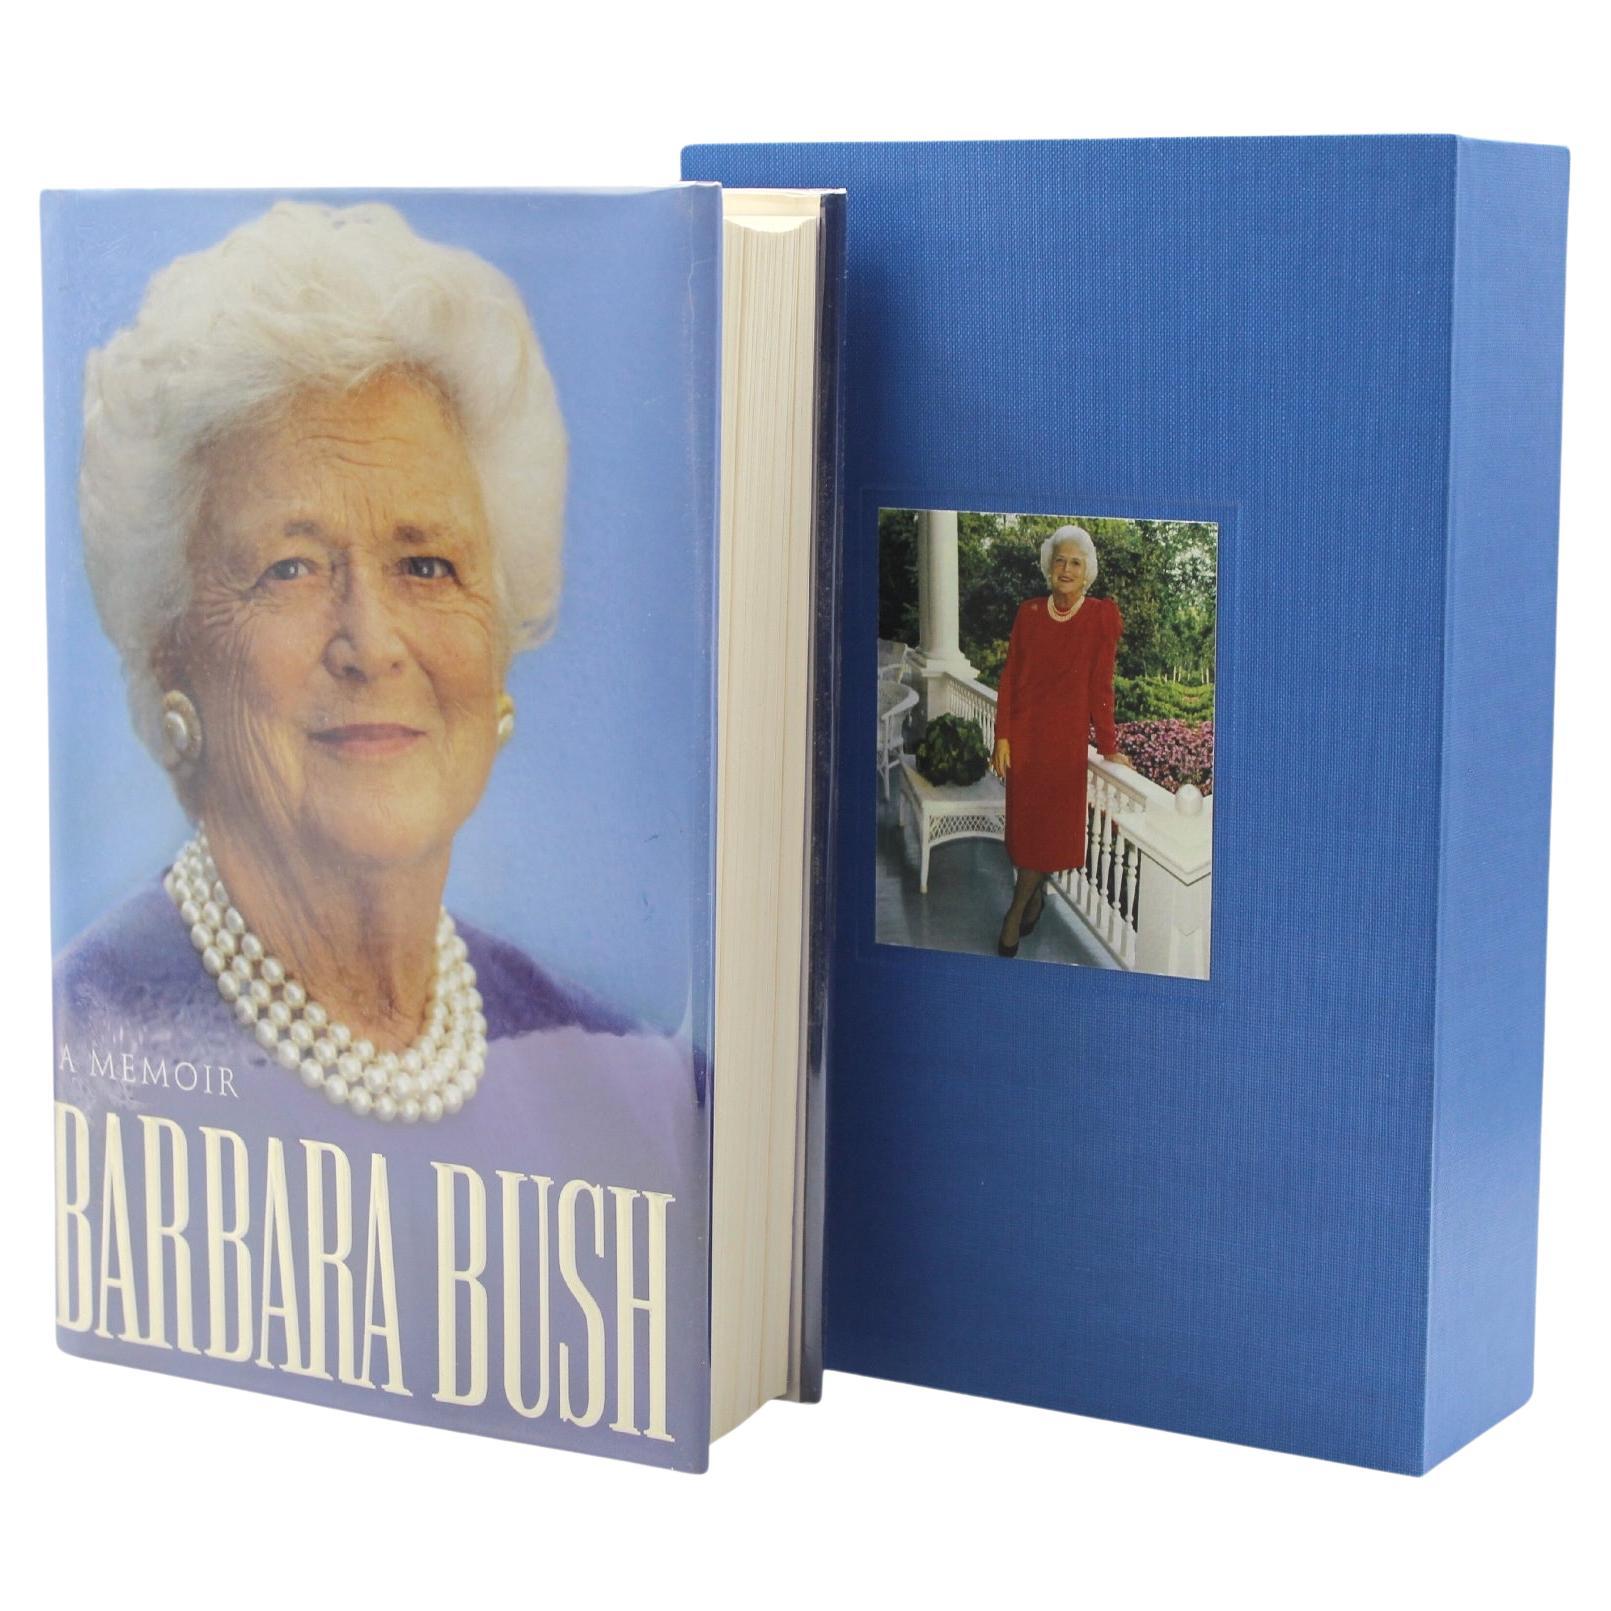 Memoir, Signed by Barbara Bush, in Original Dust Jacket, 1994